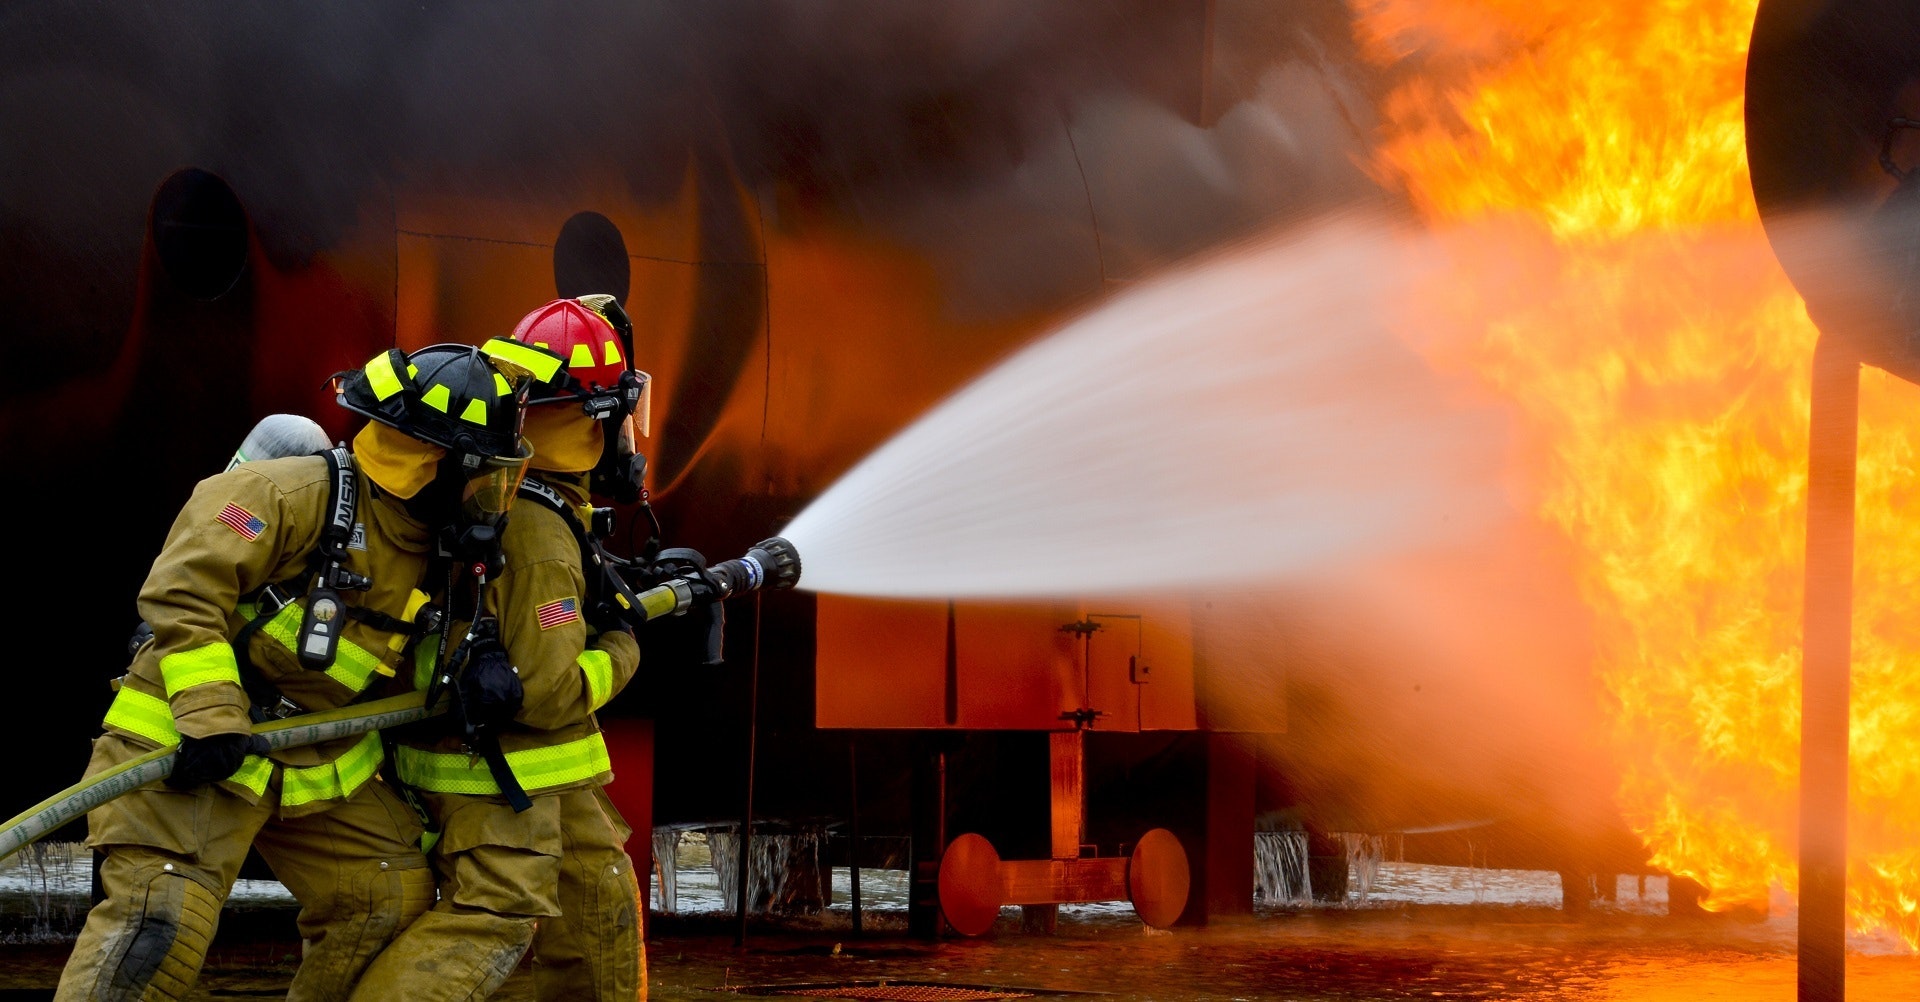 Ways to Quickly Identify A Fireman vs Civilian